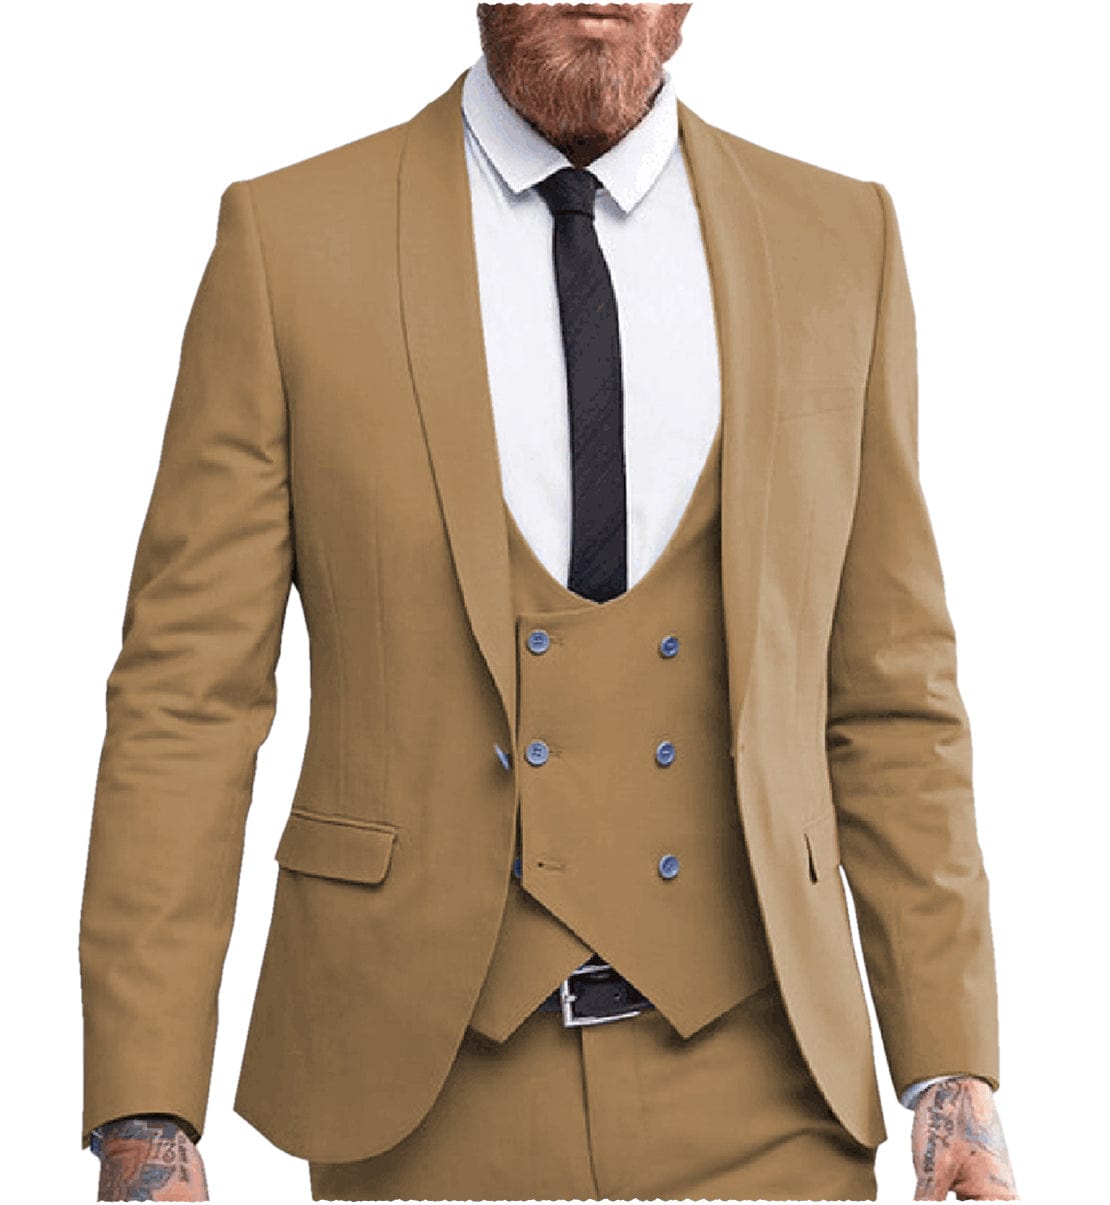 ceehuteey Flat Men's 3 Pieces Regular Fit Blazer (Blazer+vest+Pants)